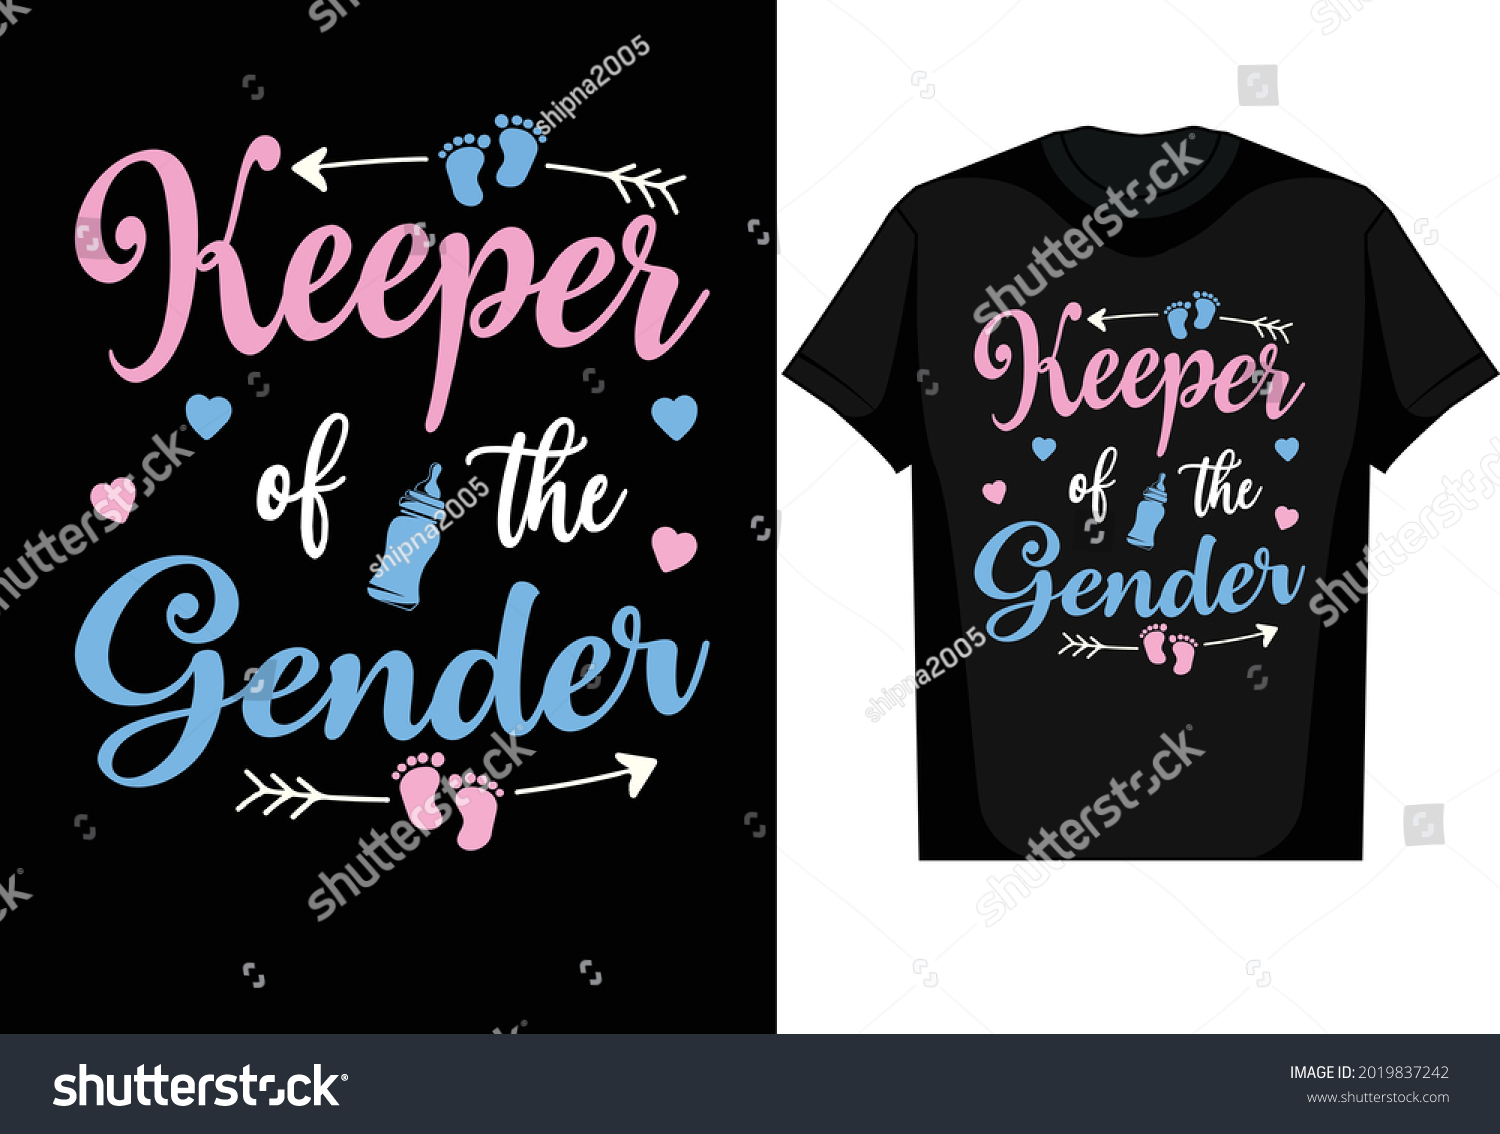 Keeper Gender Vector T Shirt Design Stock Vector (Royalty Free) 2019837242 ...